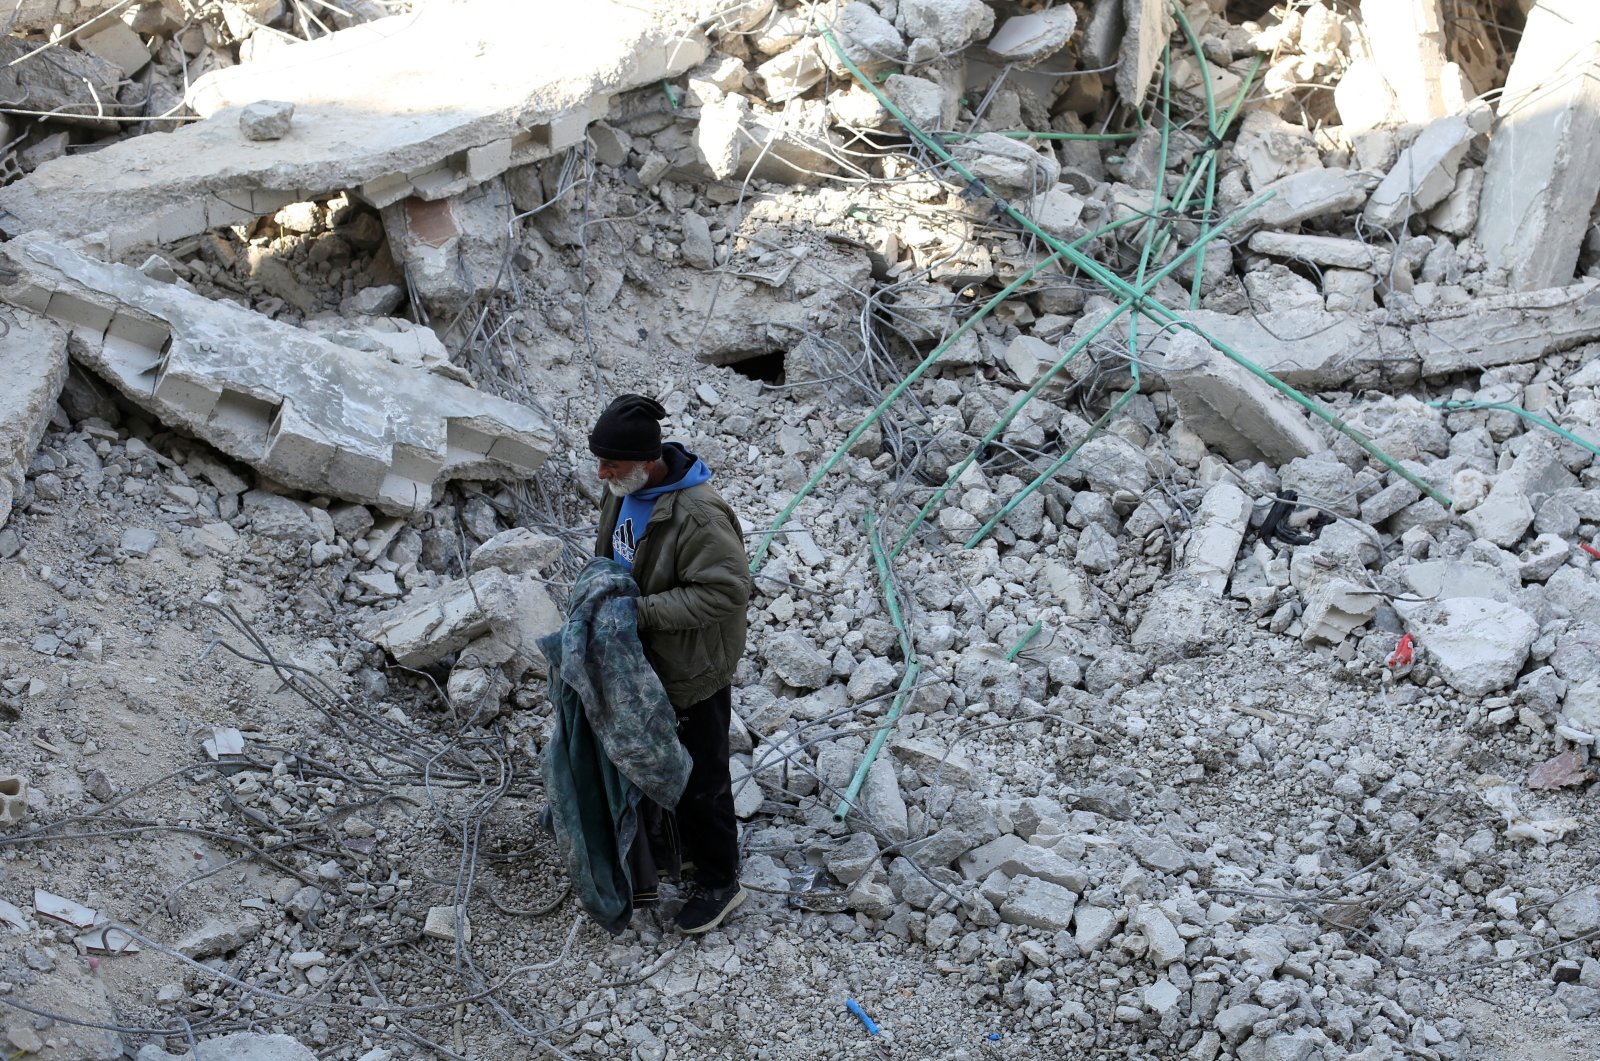 Warga Suriah yang dilanda perang berjuang untuk mendapatkan bantuan, membangun kembali setelah gempa